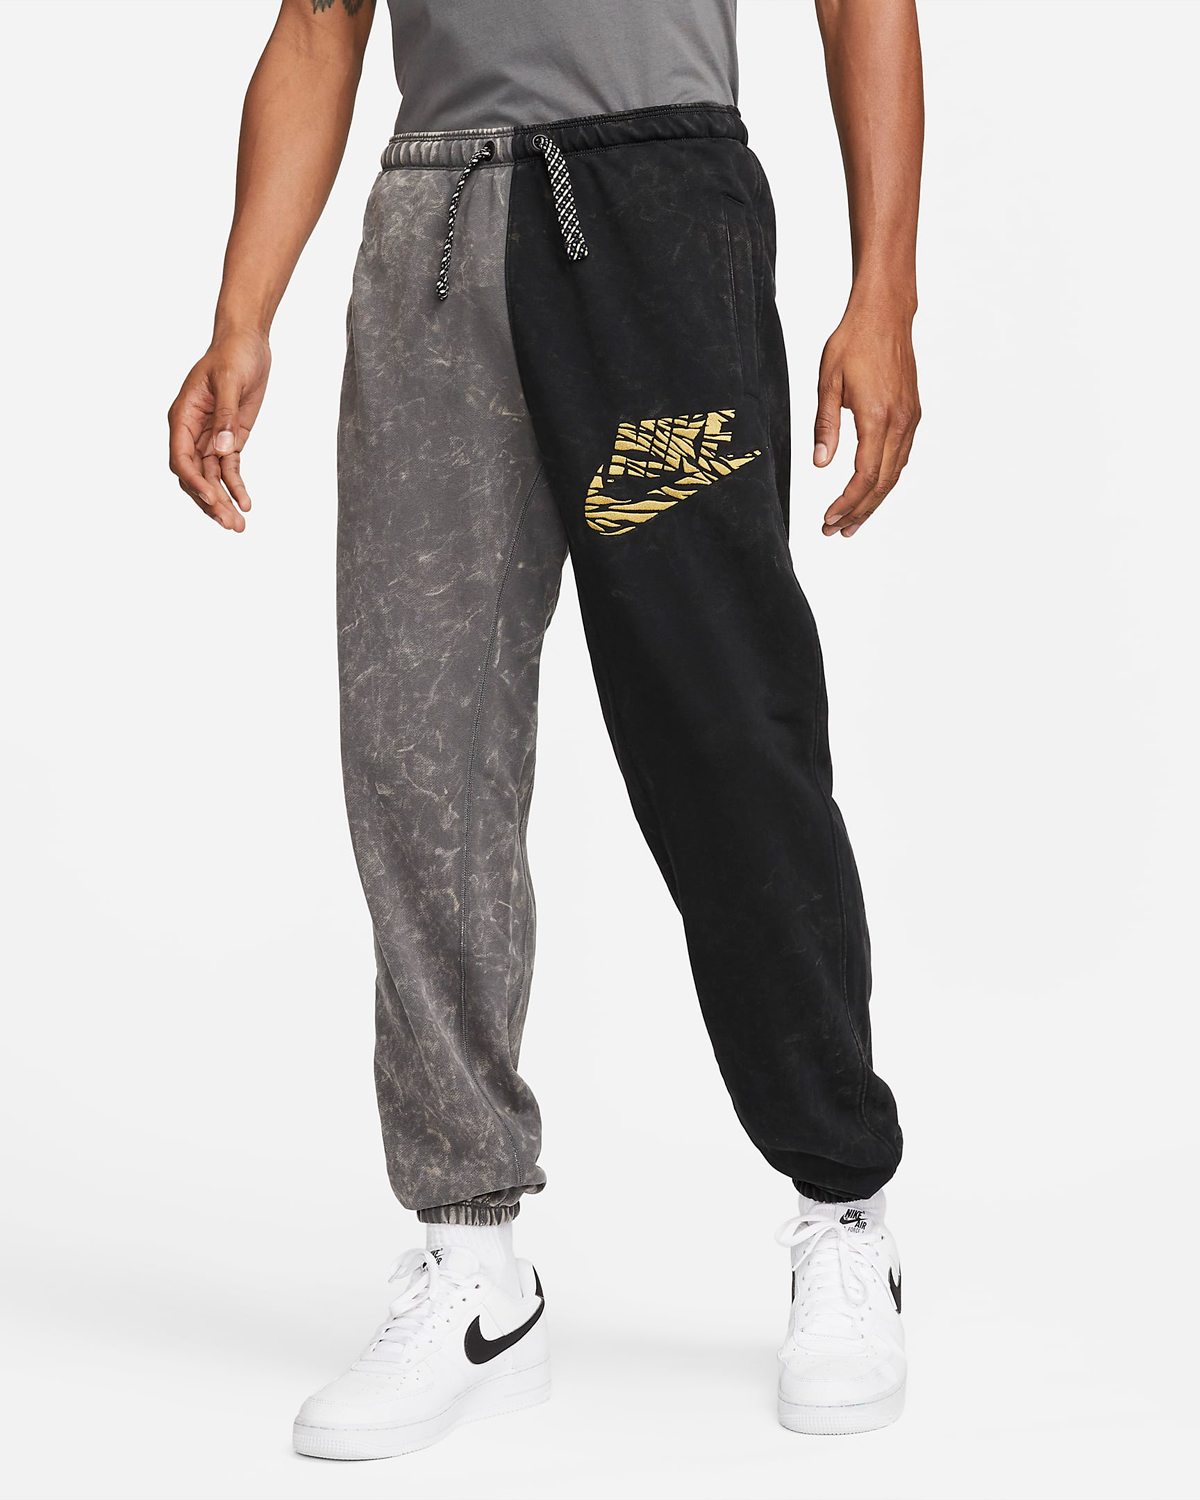 Nike-Standard-Issue-Basketball-Pants-Black-Gold-1